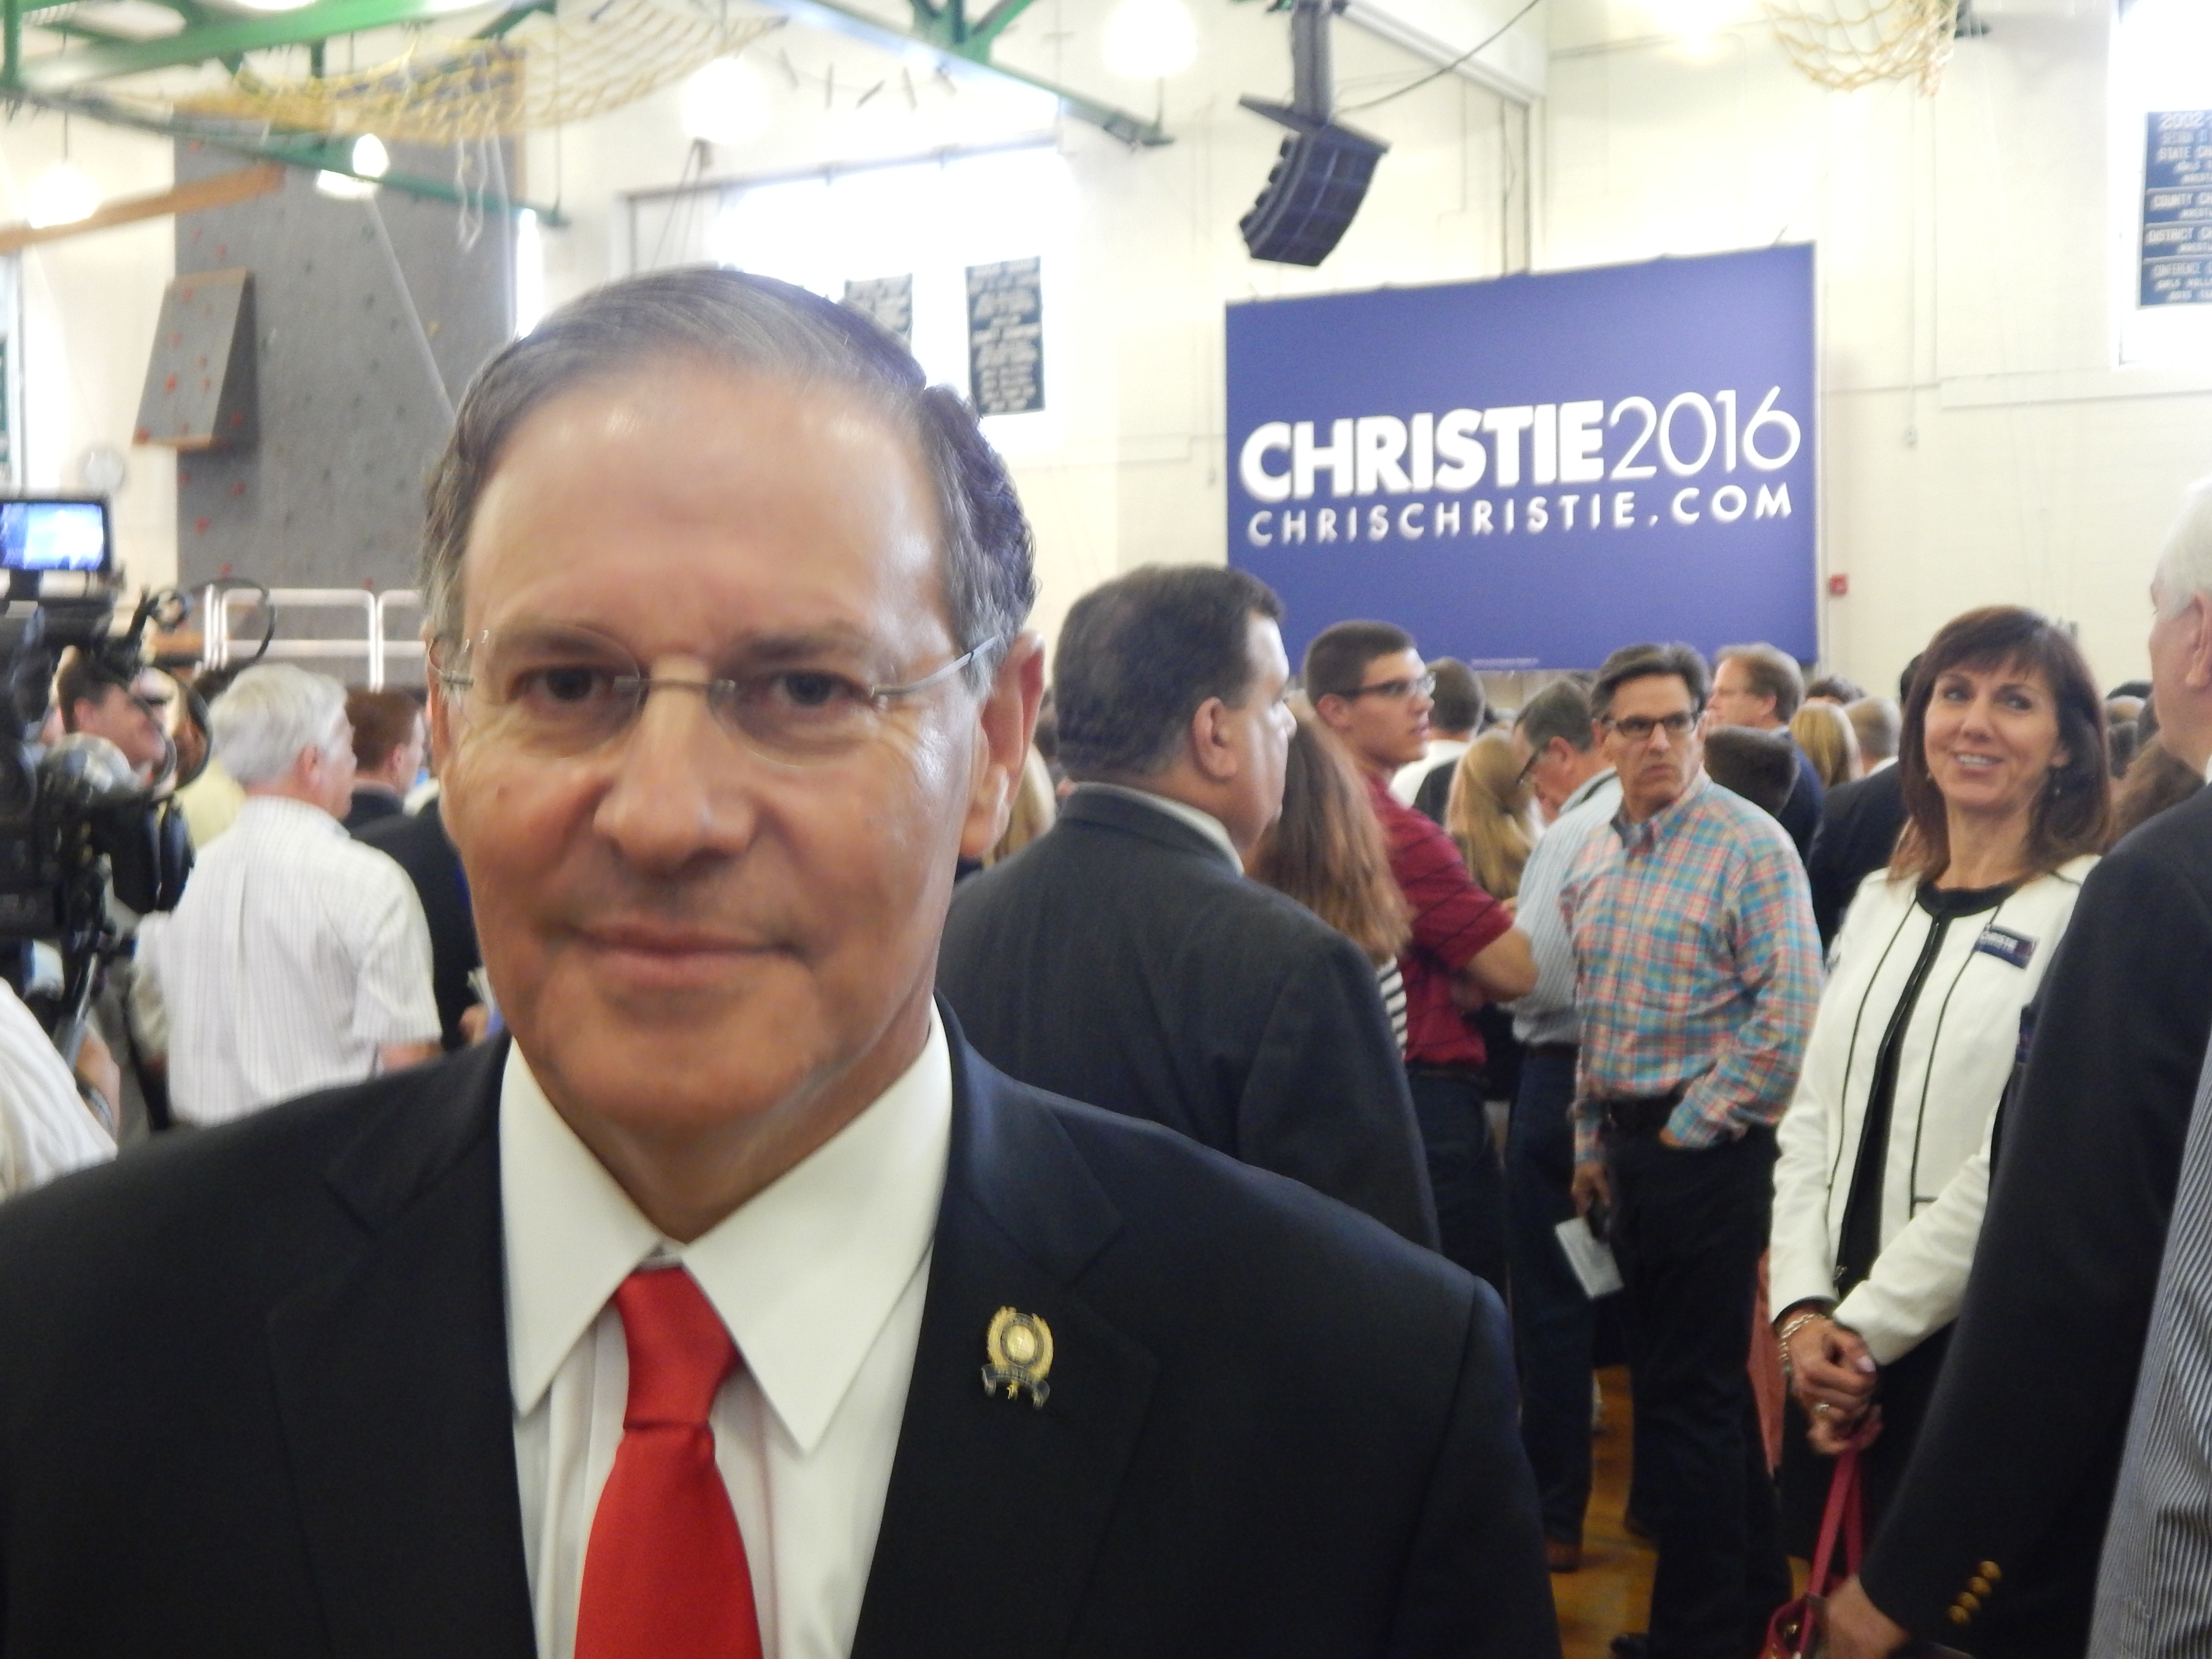 JonBramnick-Christie2016-June30,2015